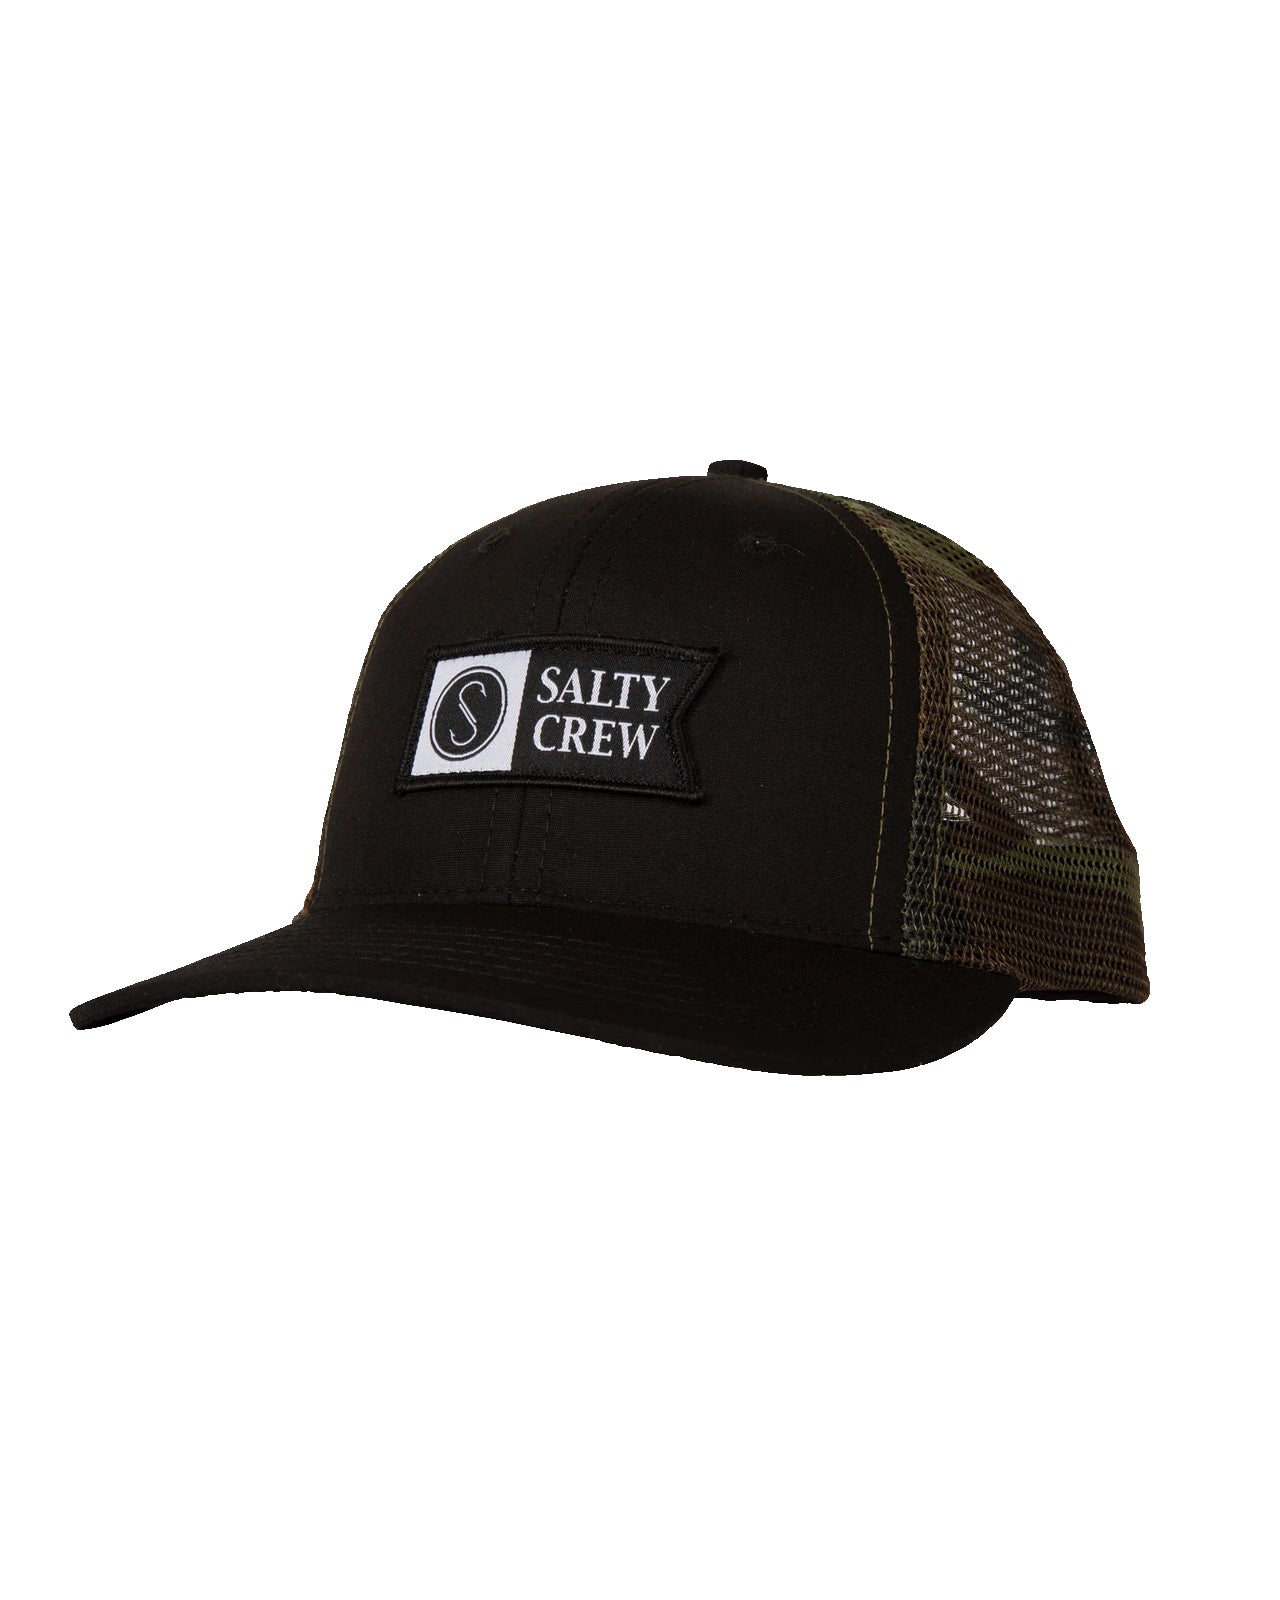 Salty Crew Pinnacle  Boys Retro Trucker Hat Charcoal/Black One size